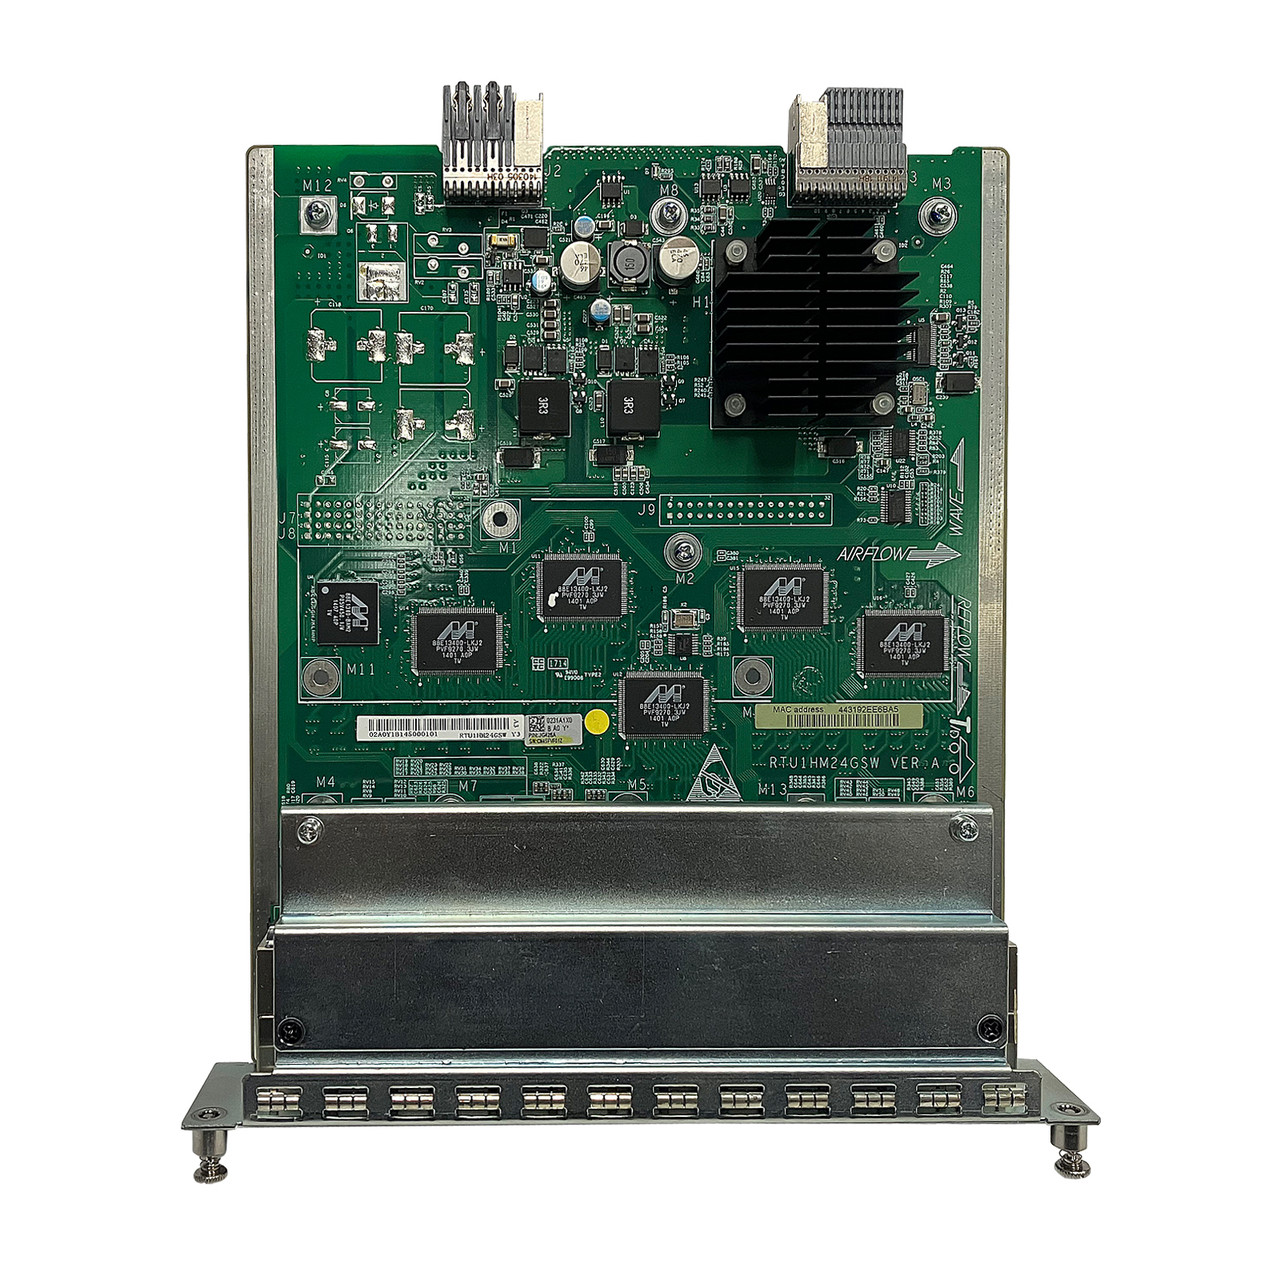 HPe JG426A MSR 24 Port Gig-T HMIM Switch Module